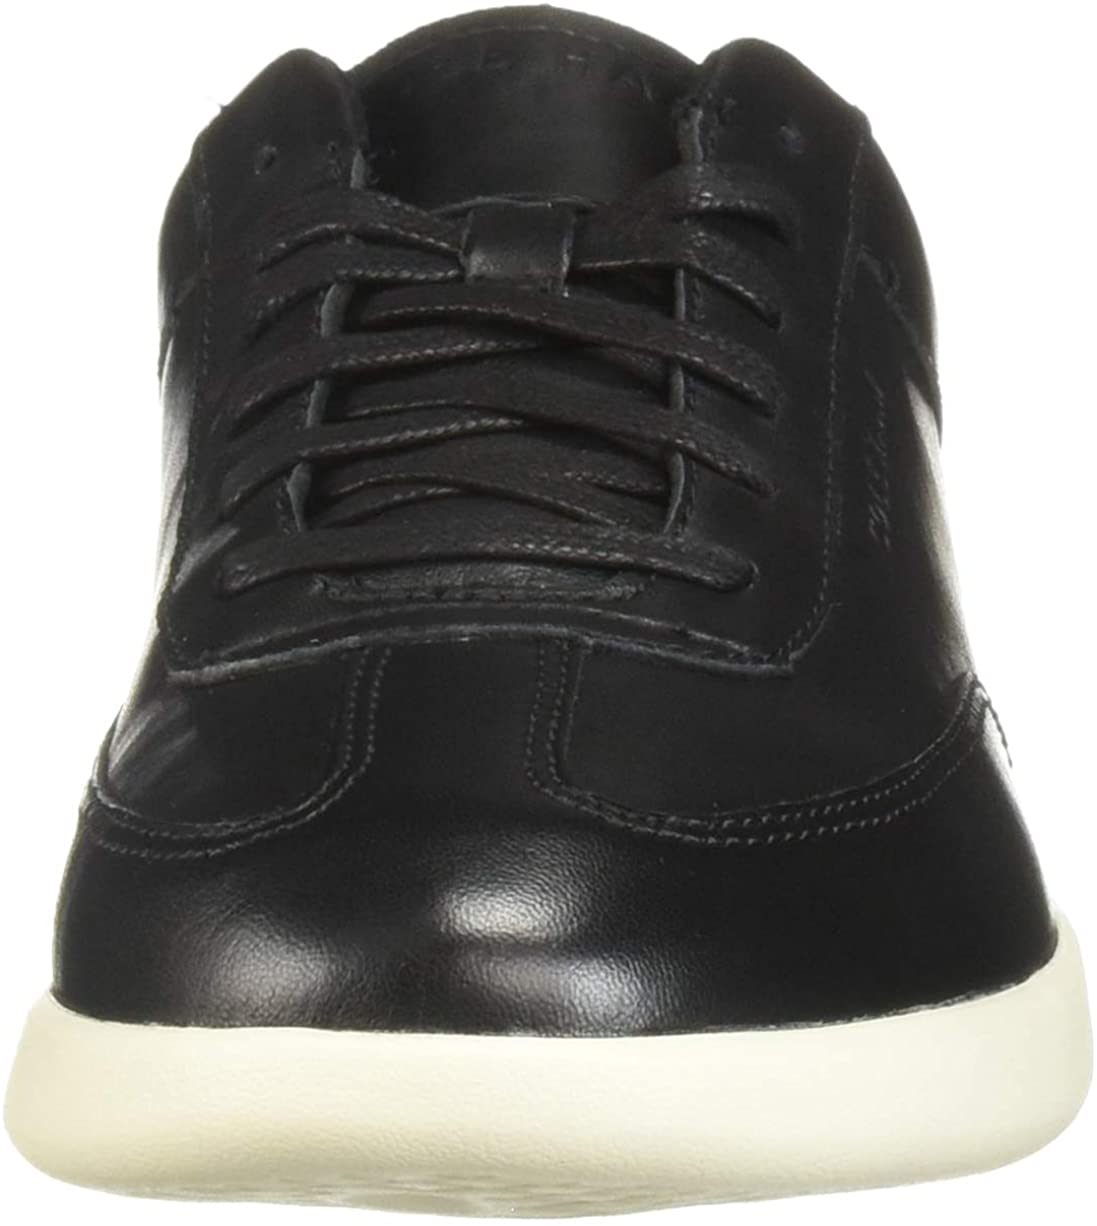 Cole Haan Men's Grand Crosscourt Turf Sneaker, Black Leather, Size 11.5 ...